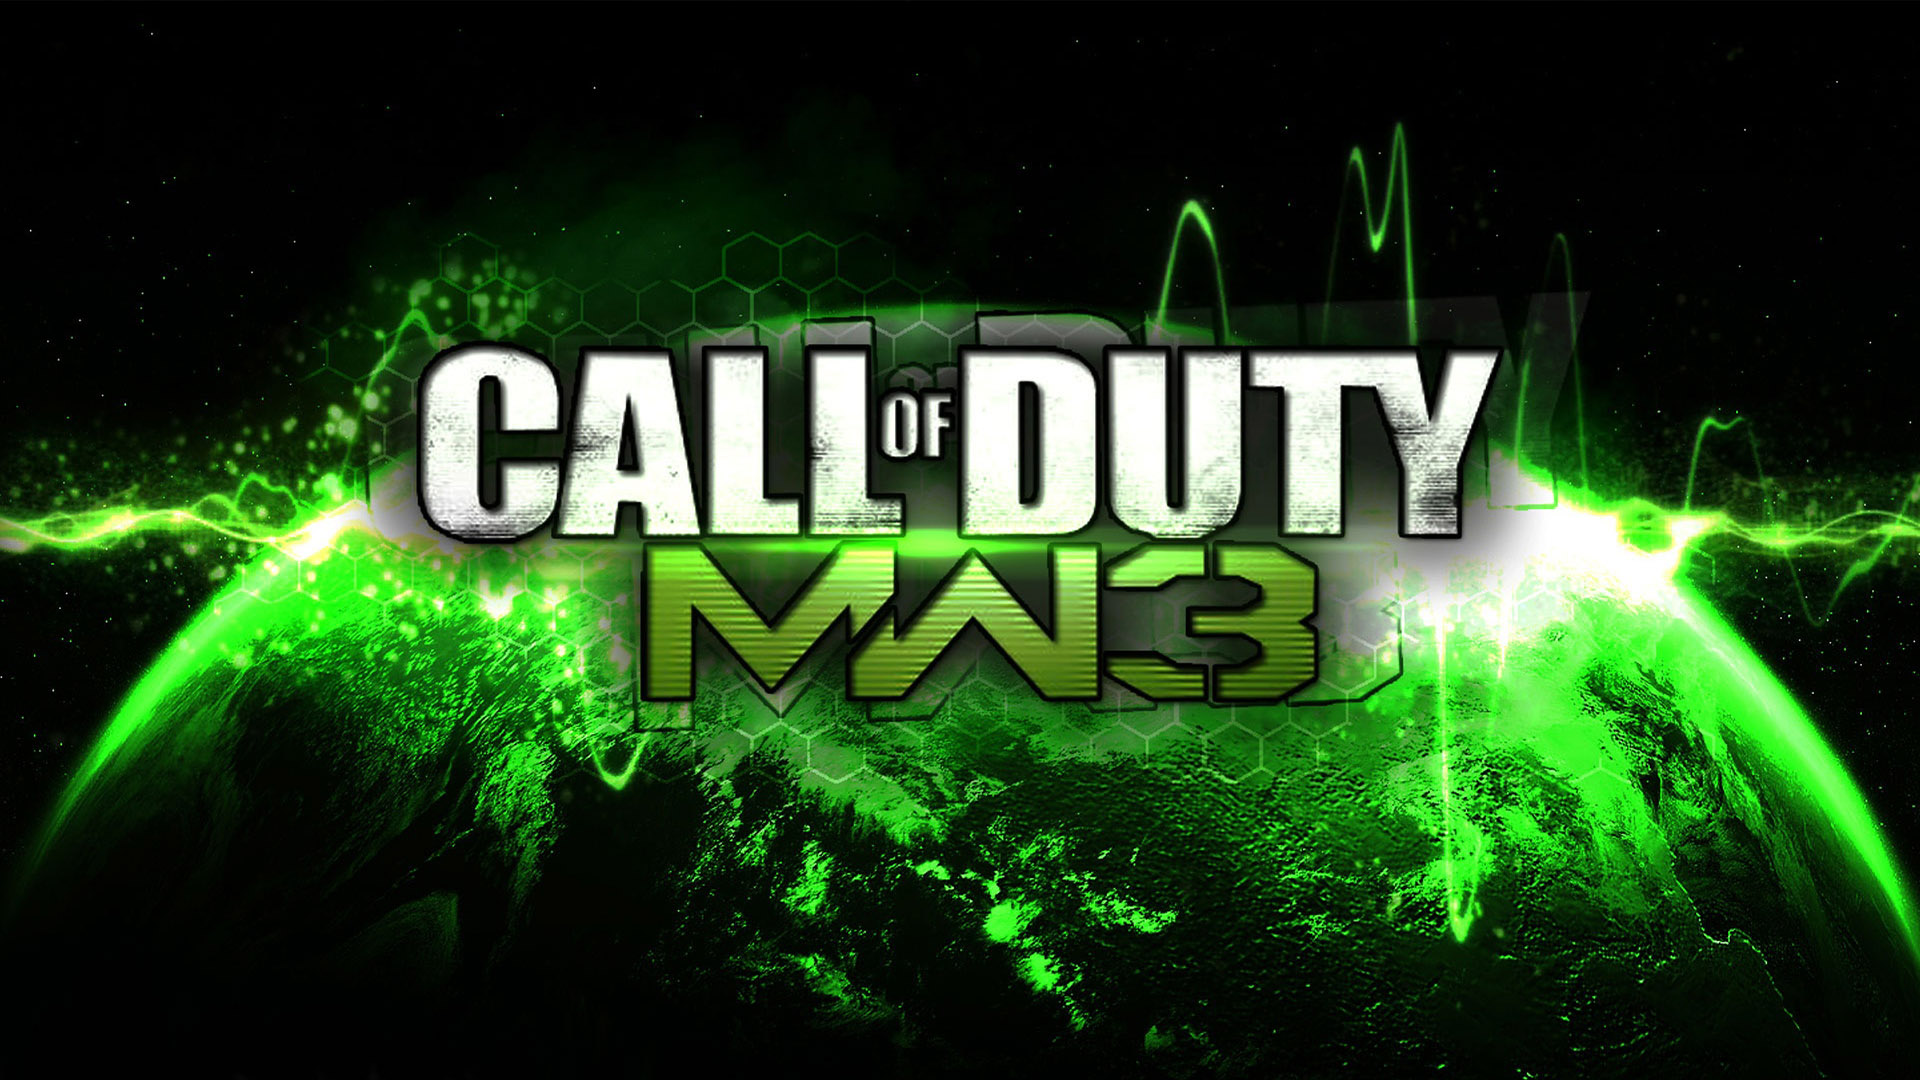 call of duty: modern warfare 3, video game, call of duty